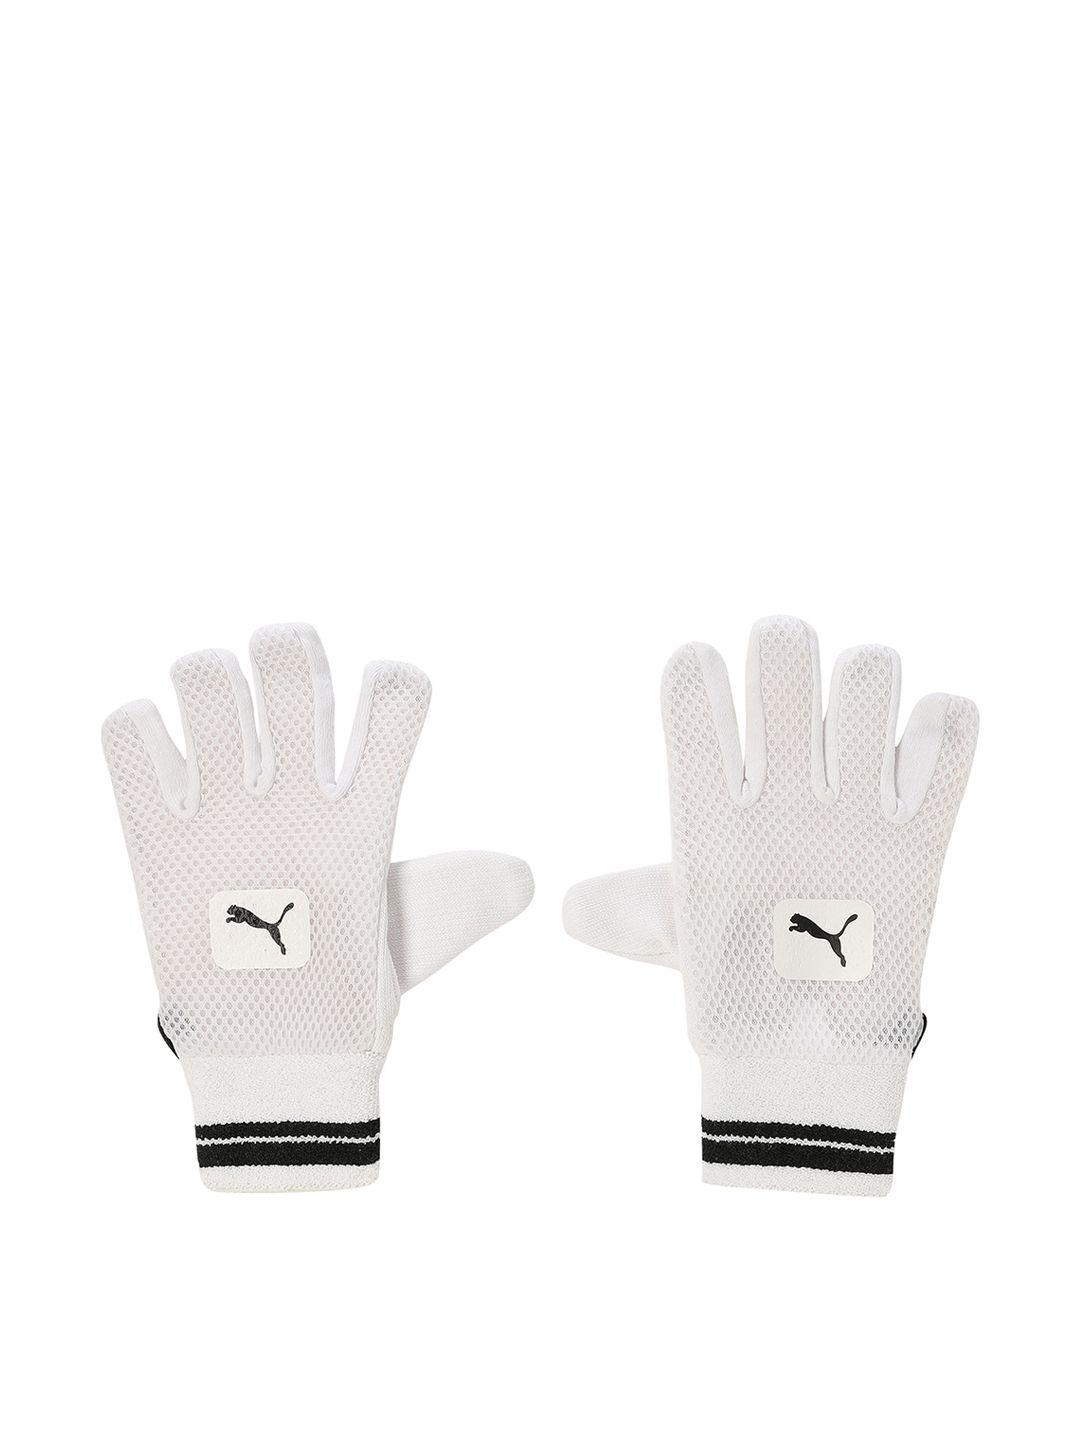 puma-future-3-textured-sports-gloves